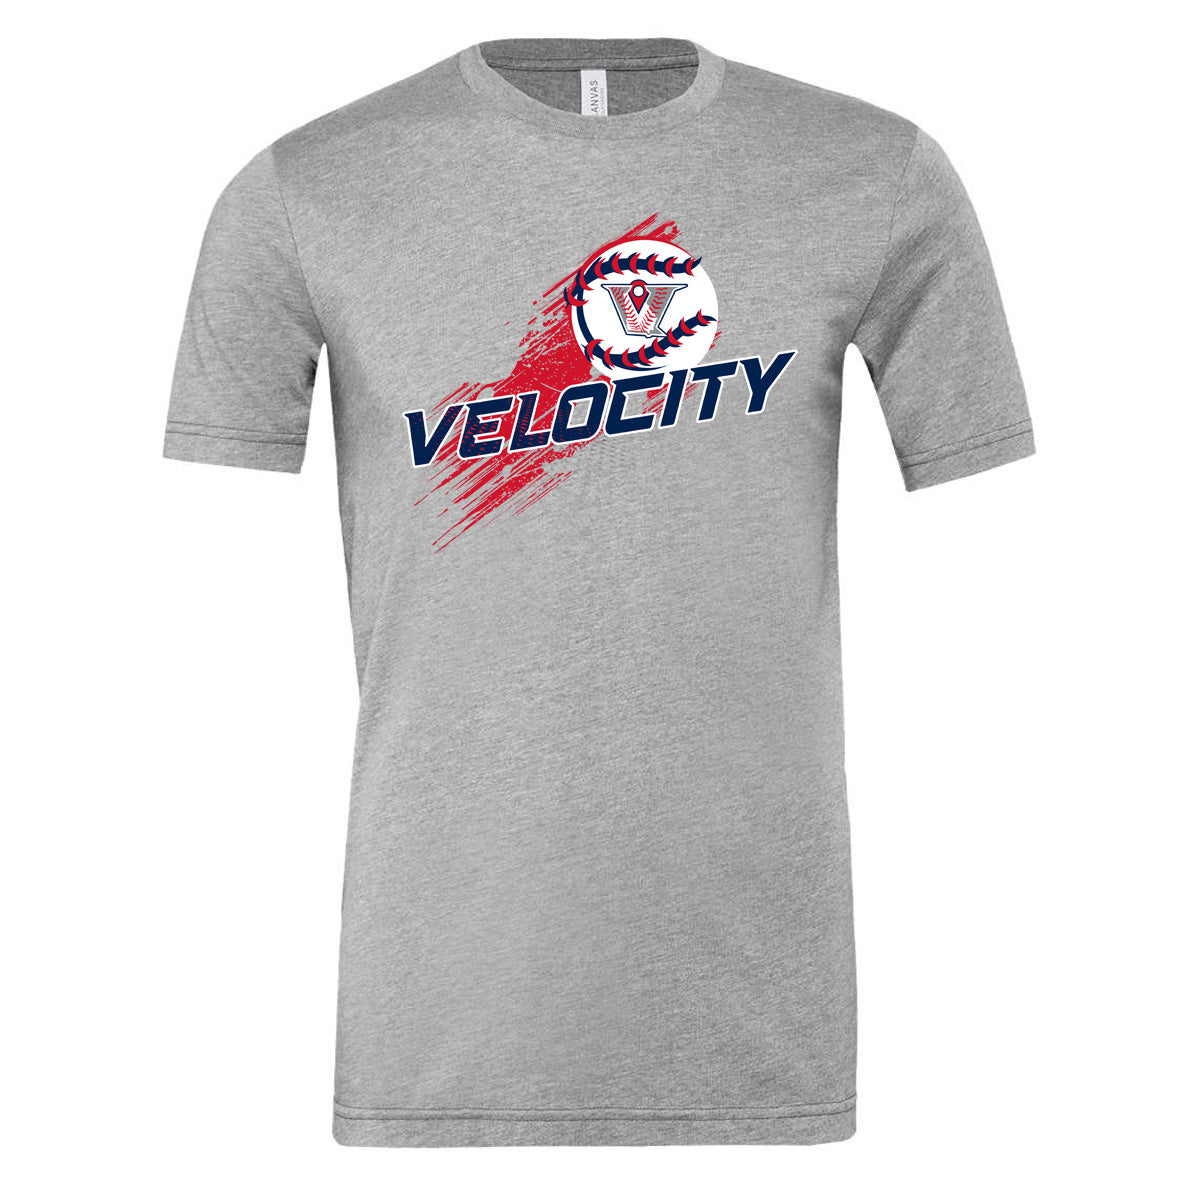 Velo BB - Velocity Streak - Athletic Heather (Tee/Hoodie/Sweatshirt) - Southern Grace Creations